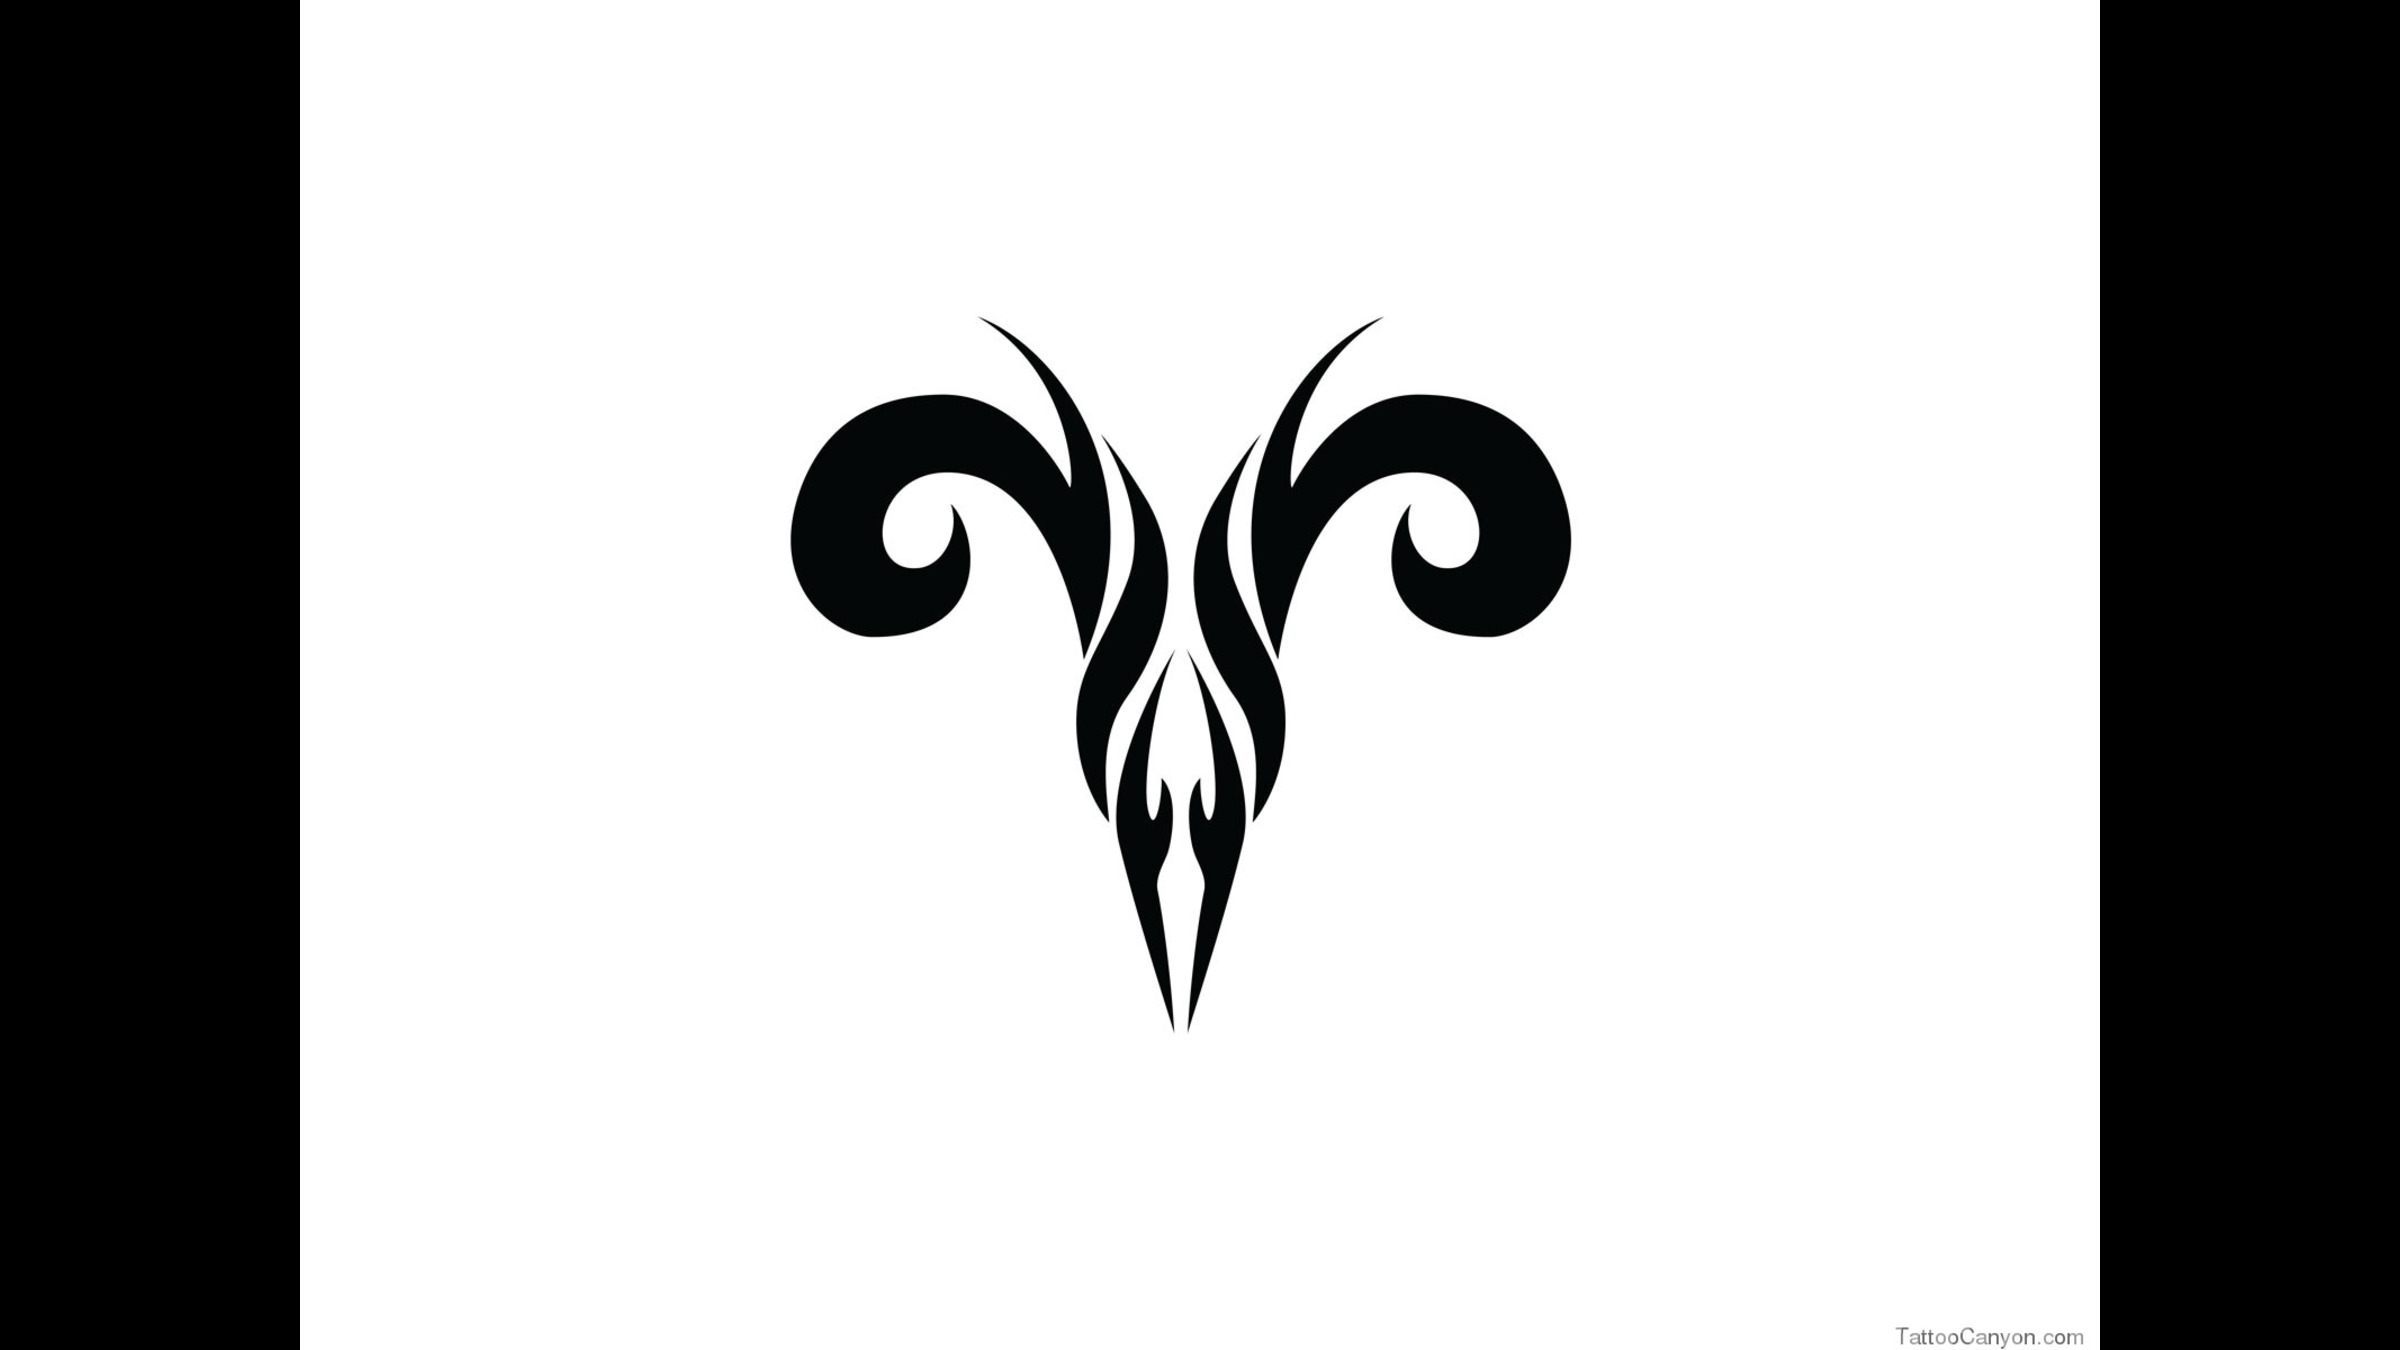 Zodiac Signs Tattoos: Aries - YouTube